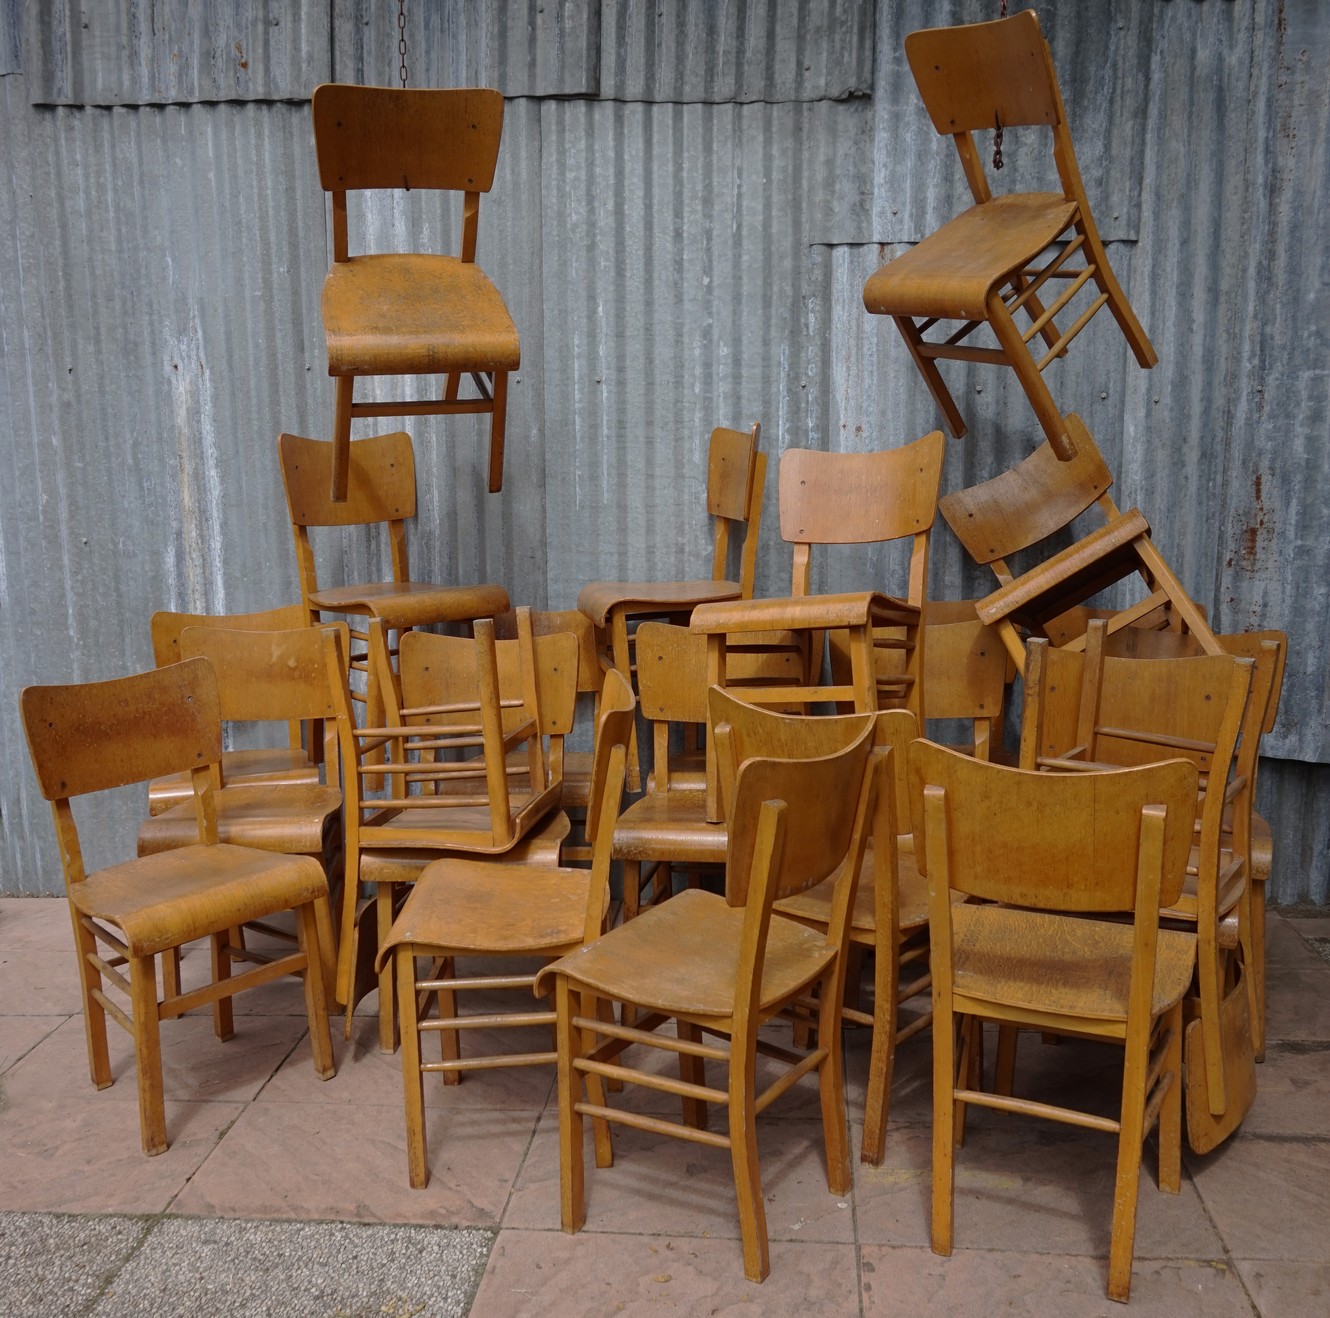 krullen Vrijlating Grappig Partij industriele vintage houten cafestoelen, horeca stoelen